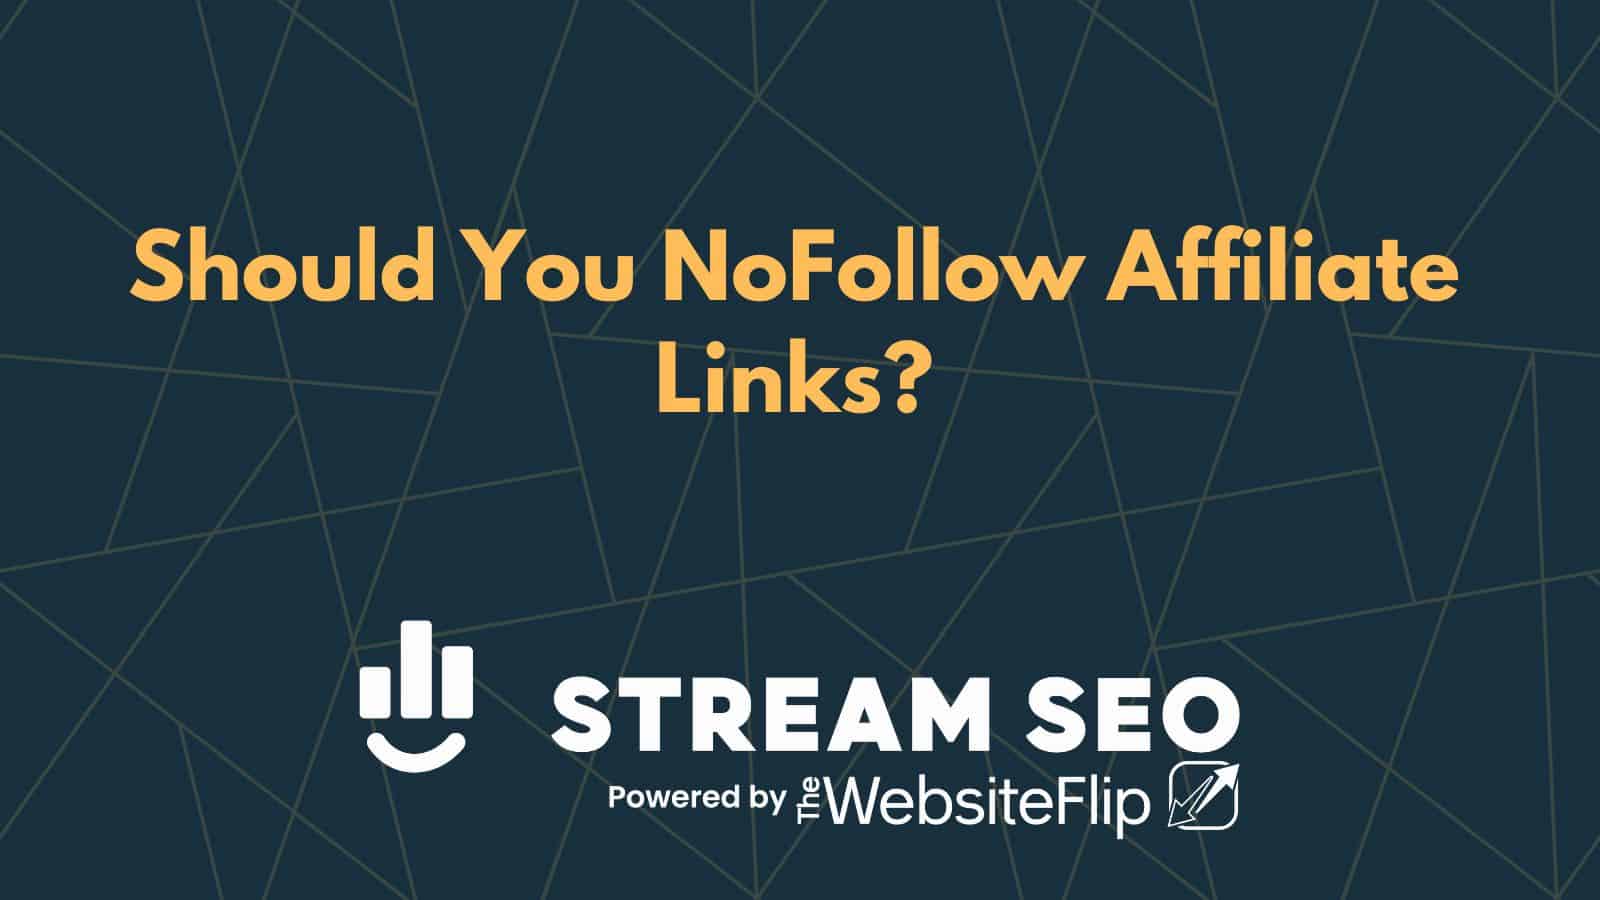 Should You NoFollow Affiliate Links?